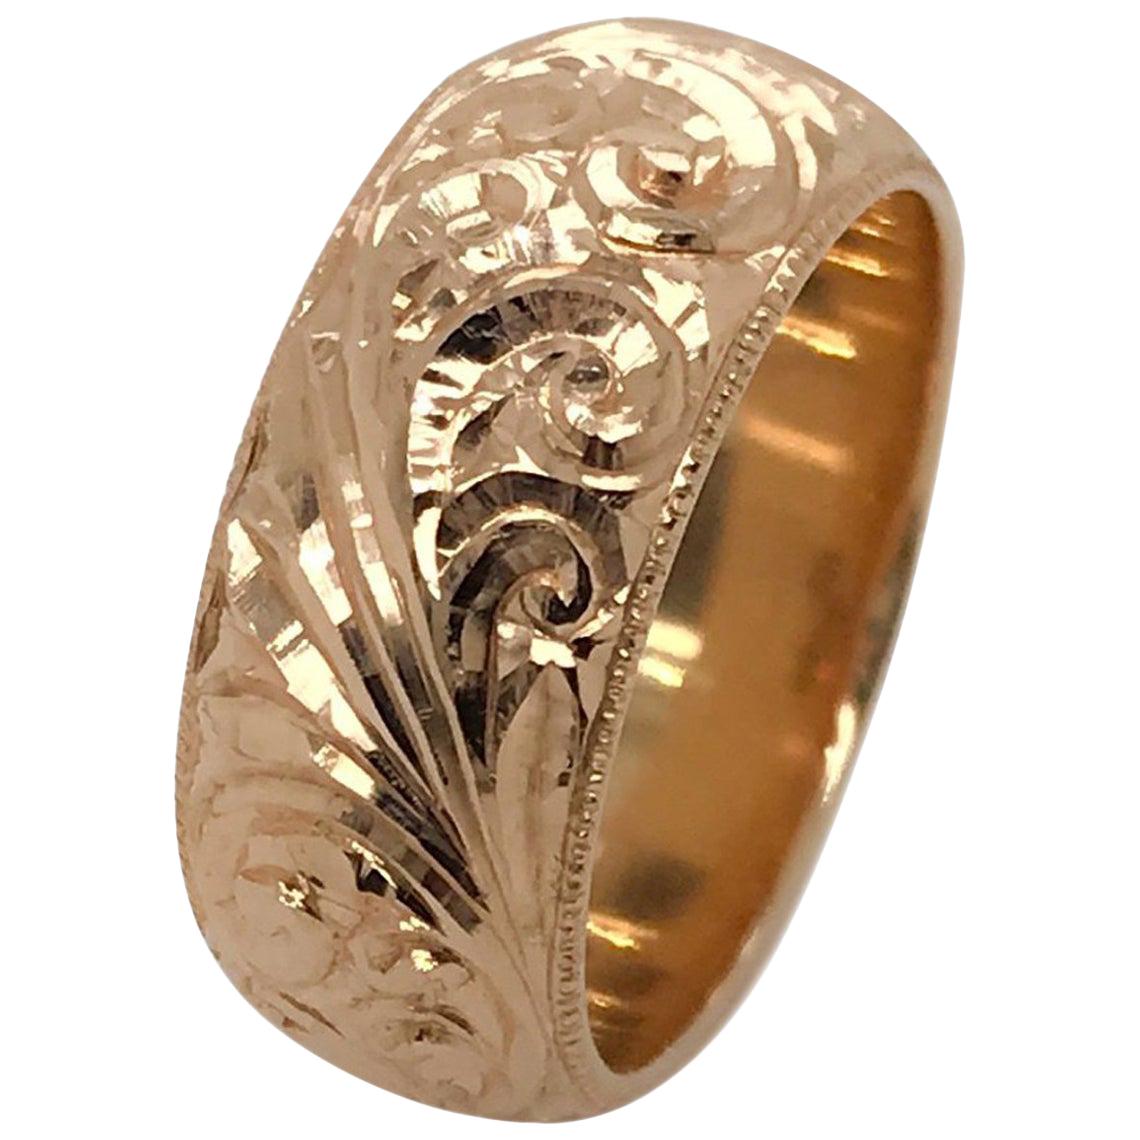 14 Karat Rose Gold Hand Engraved Russian Band Ring